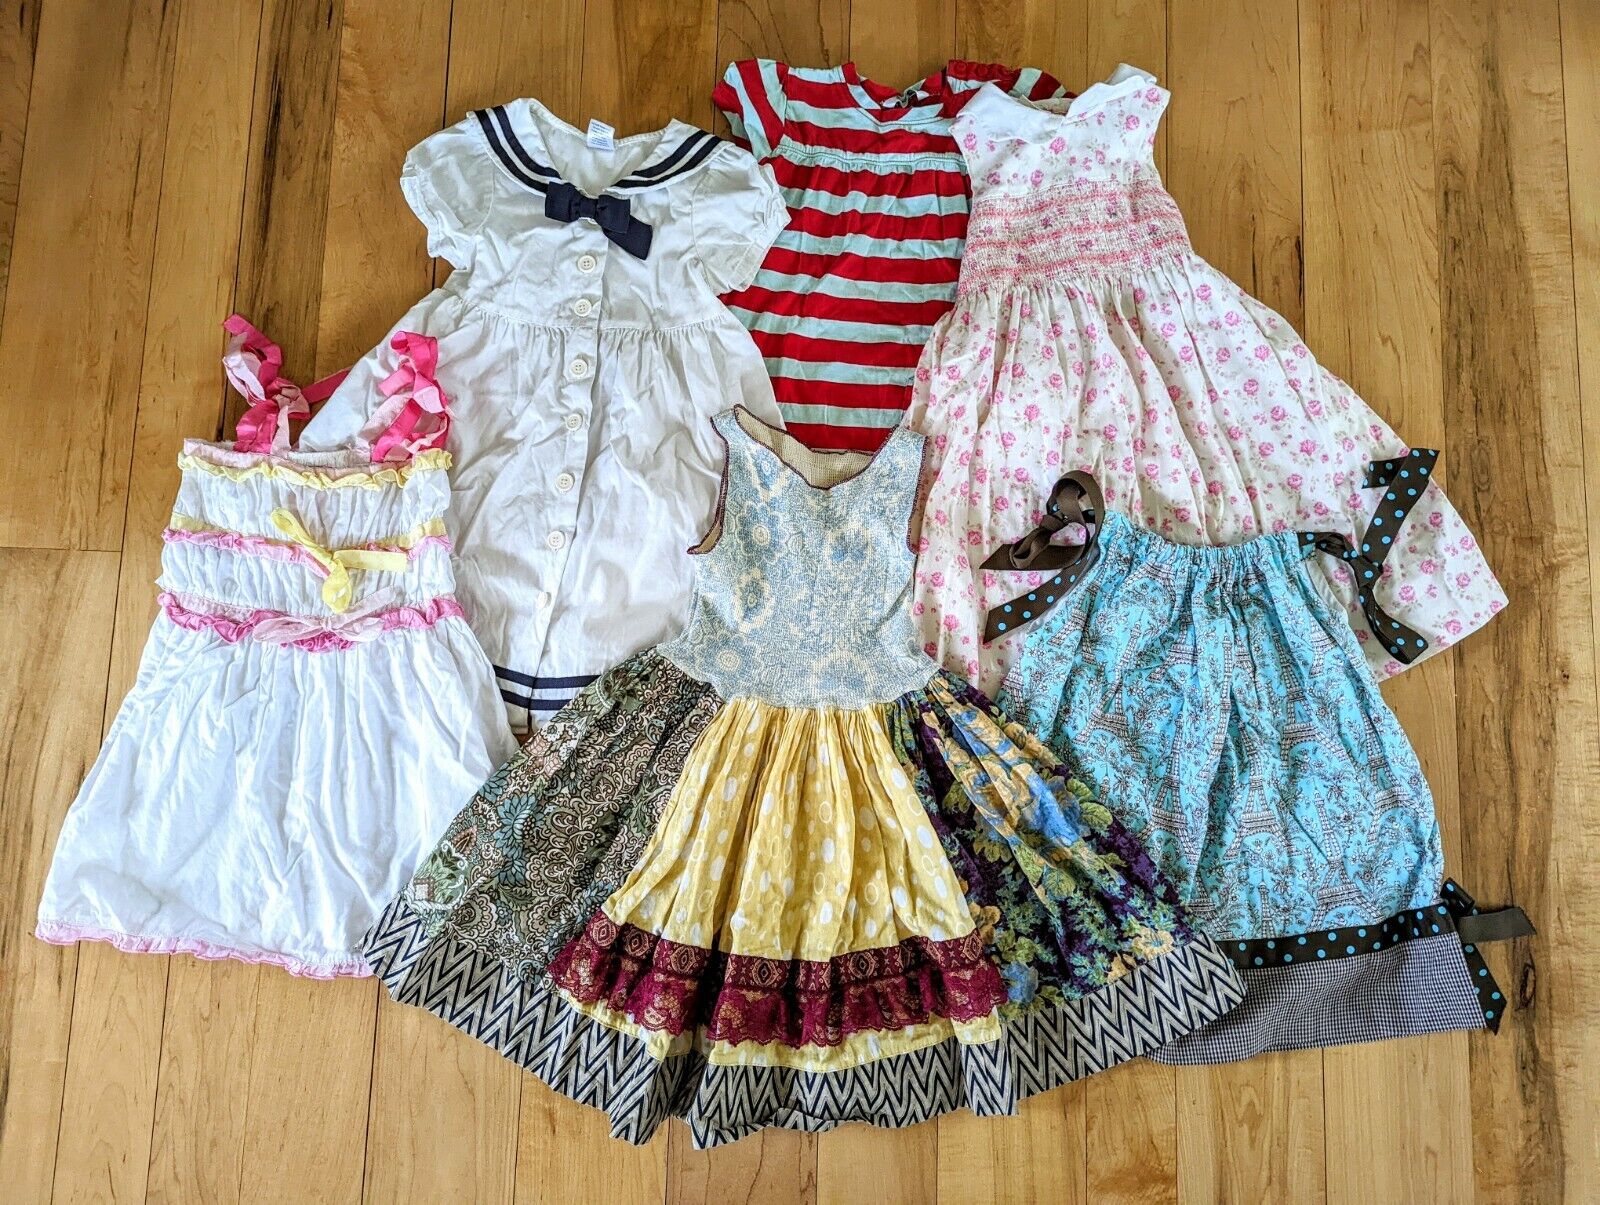 6 Pc Girls Easter Summer Spring Dresses Clothing Size 4T H&M Matilda Jane TCP H&M